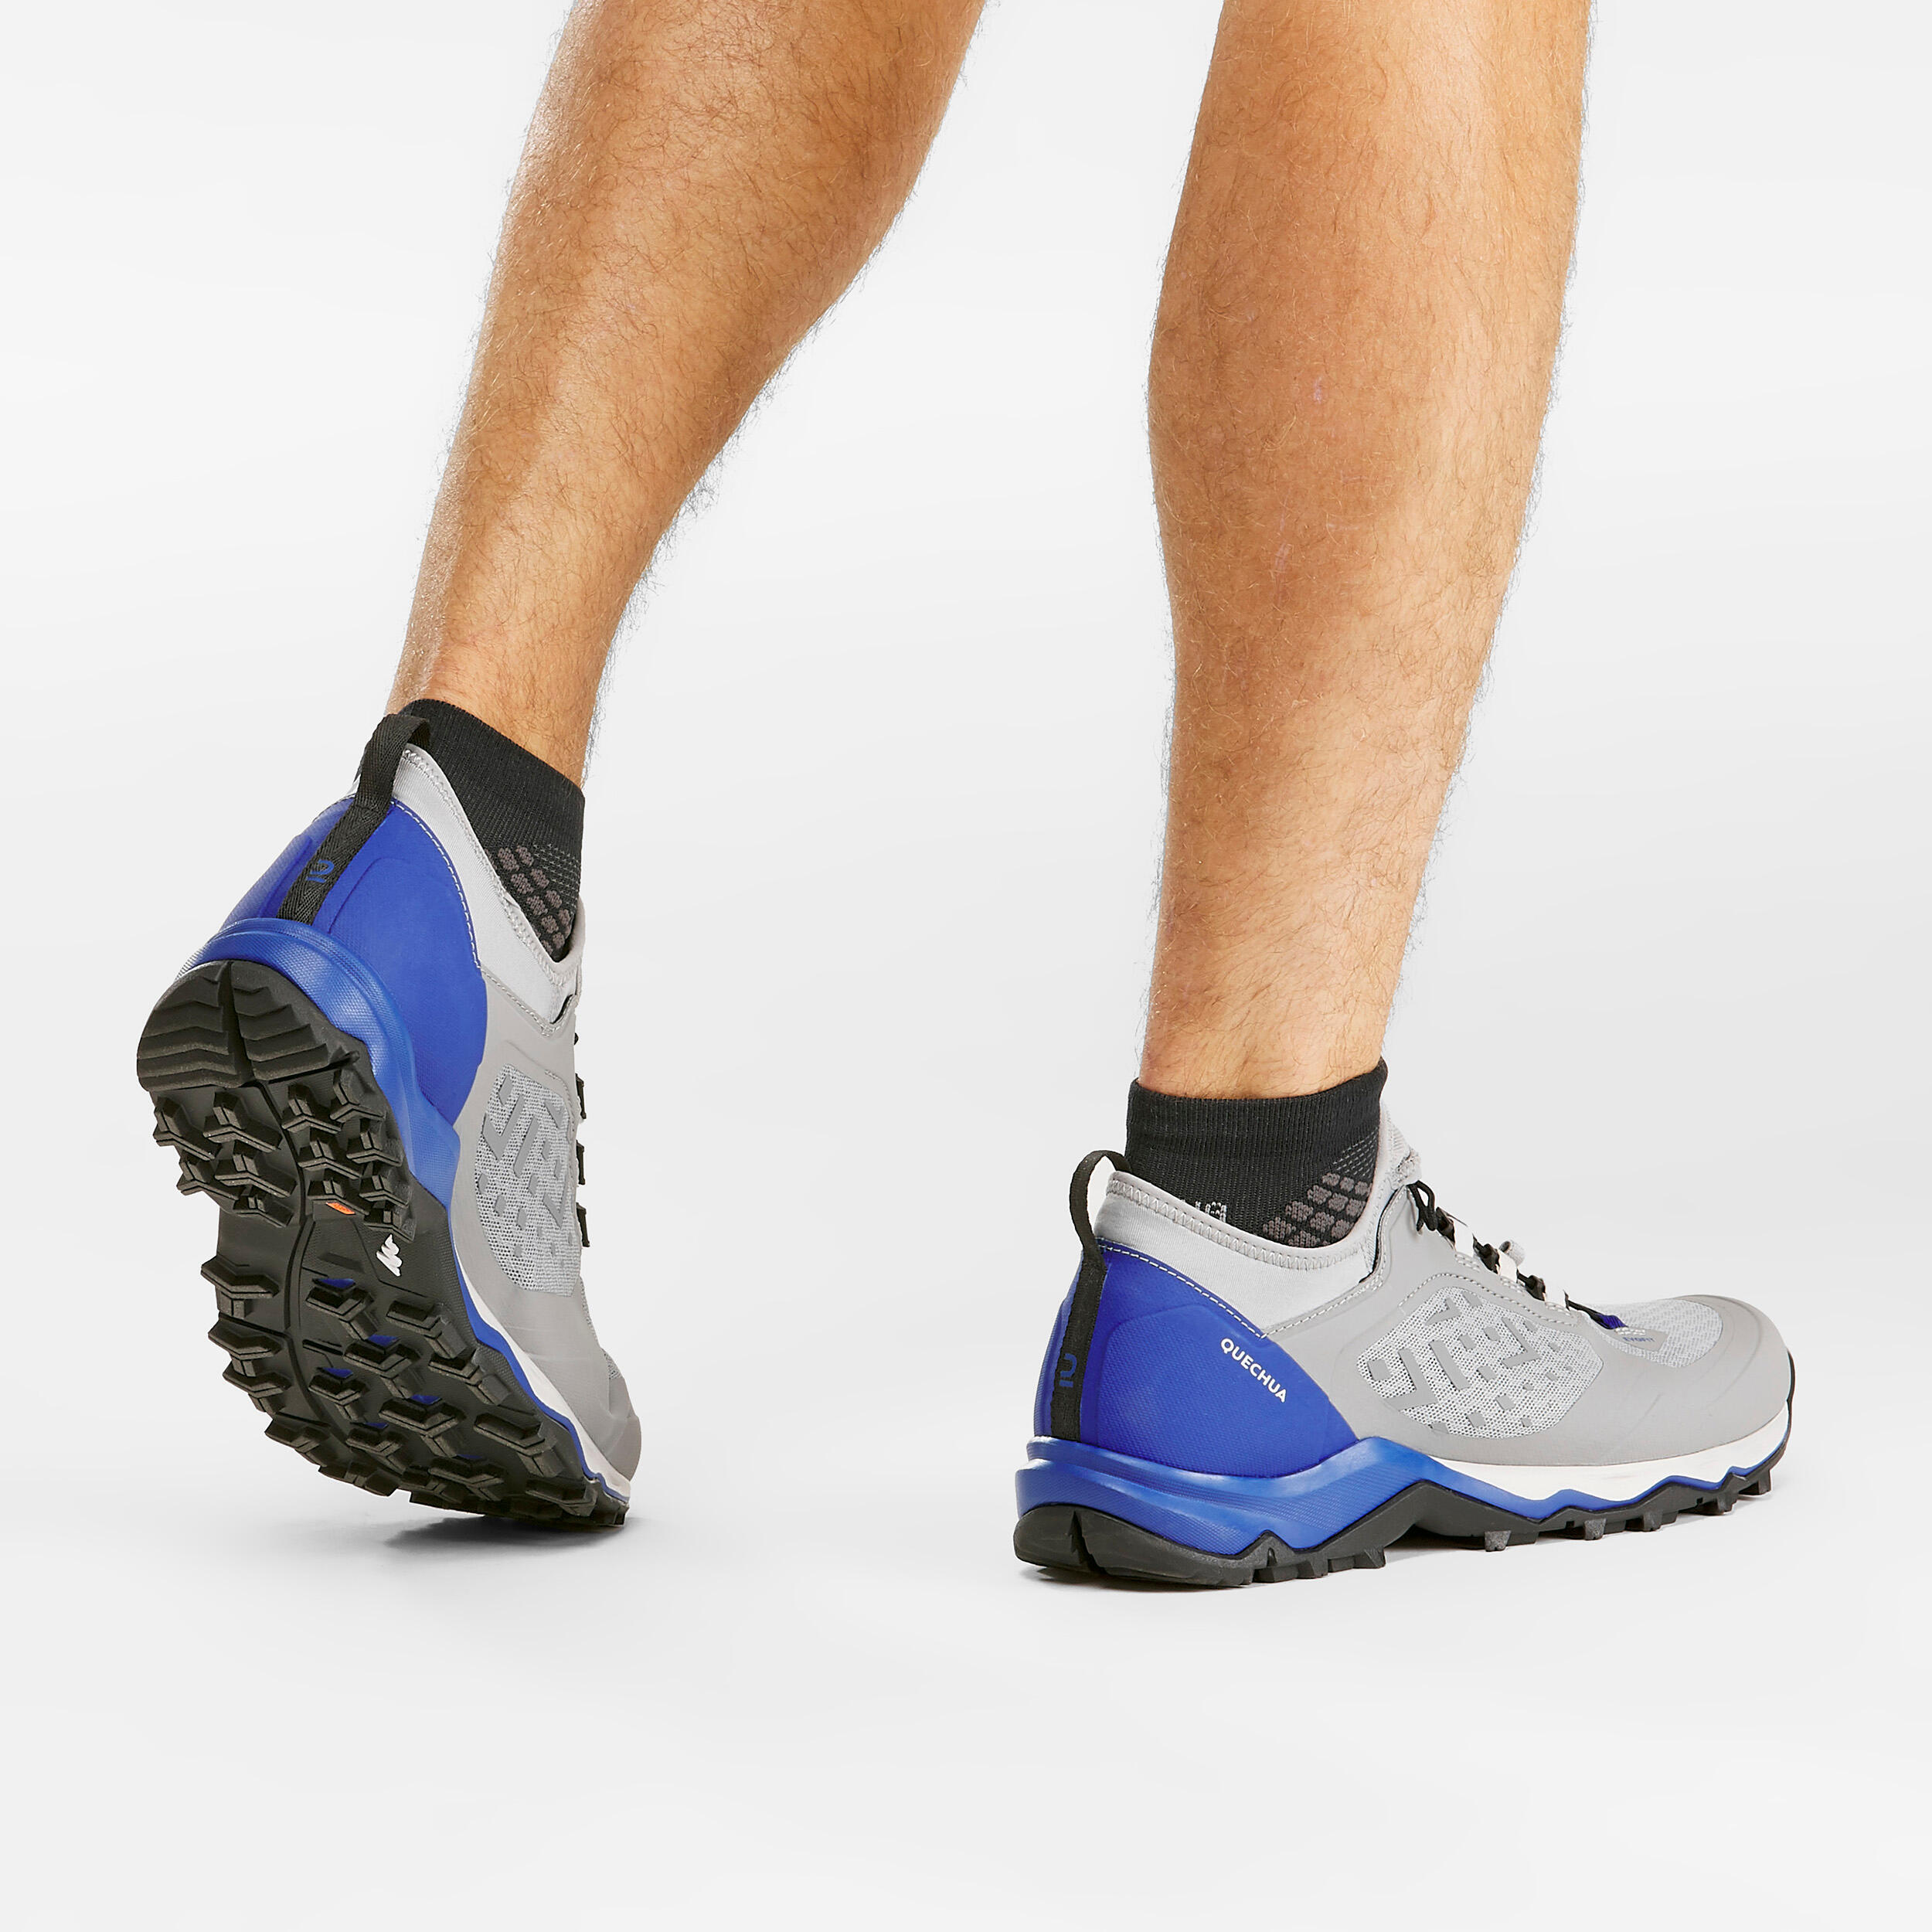 Men’s Fast Hiking Ultra Lightweight Boots - FH500 6/7